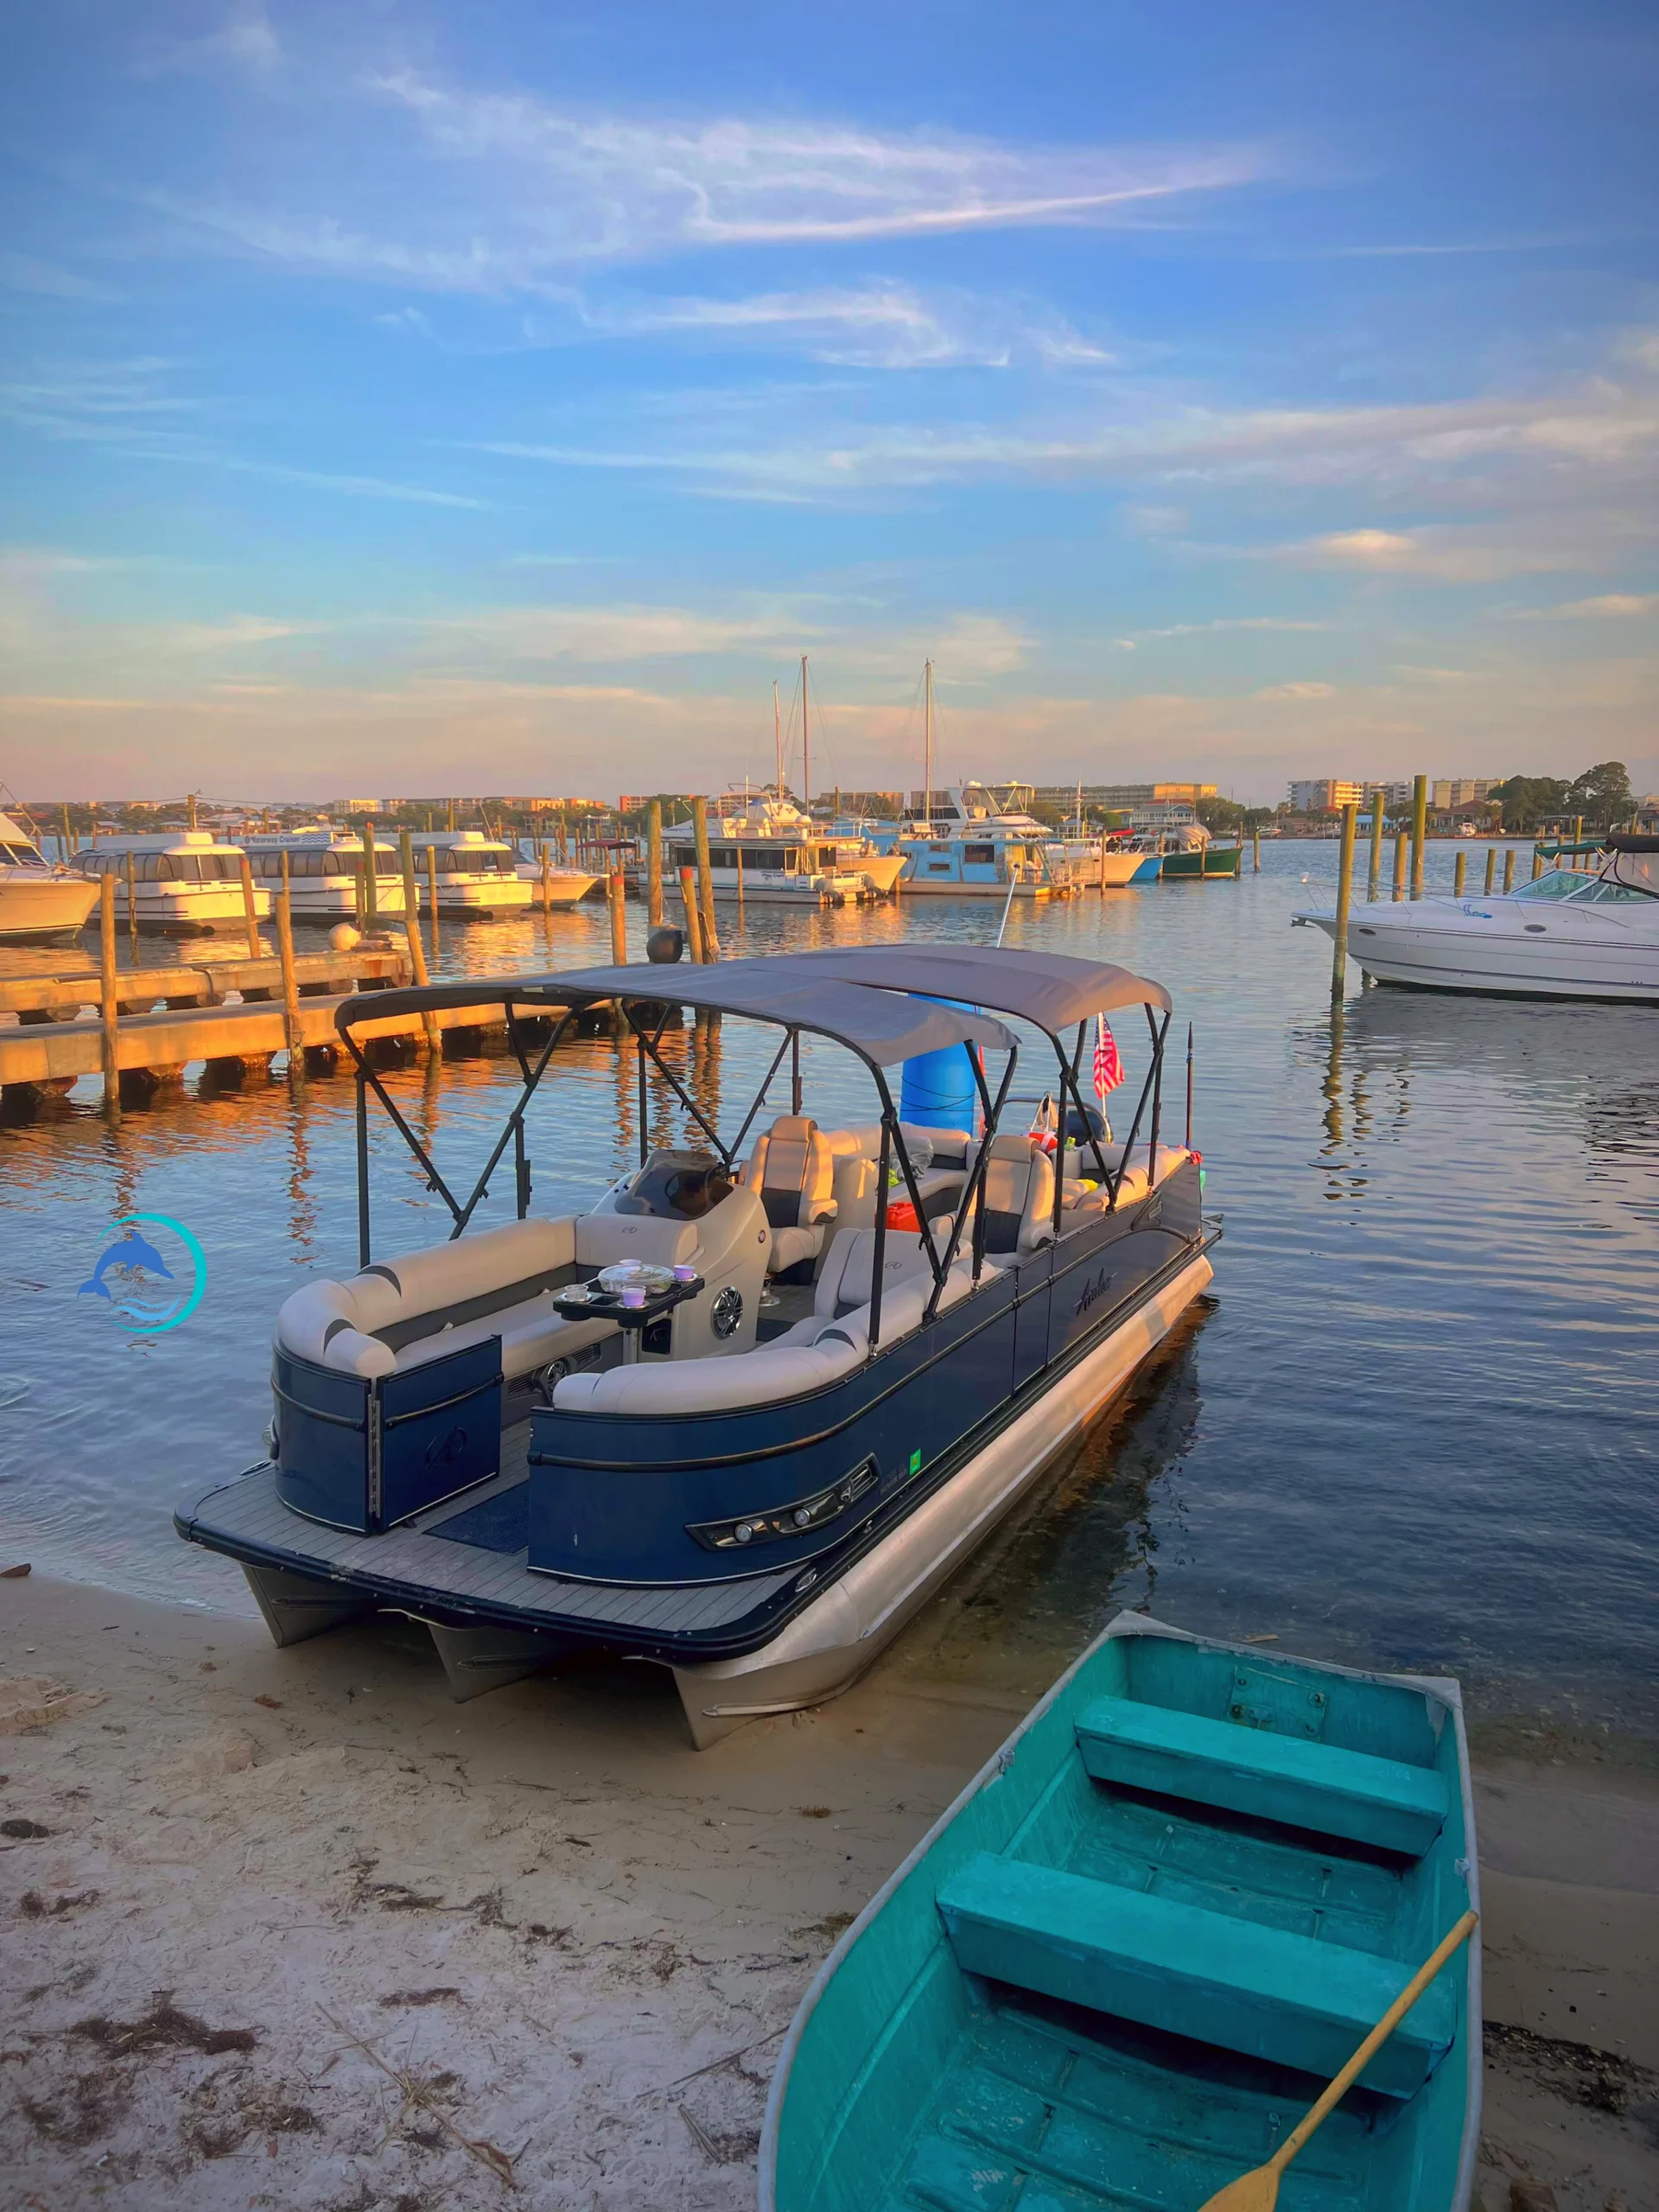 Crab Island Luxury Adventures' Azul at Sunset